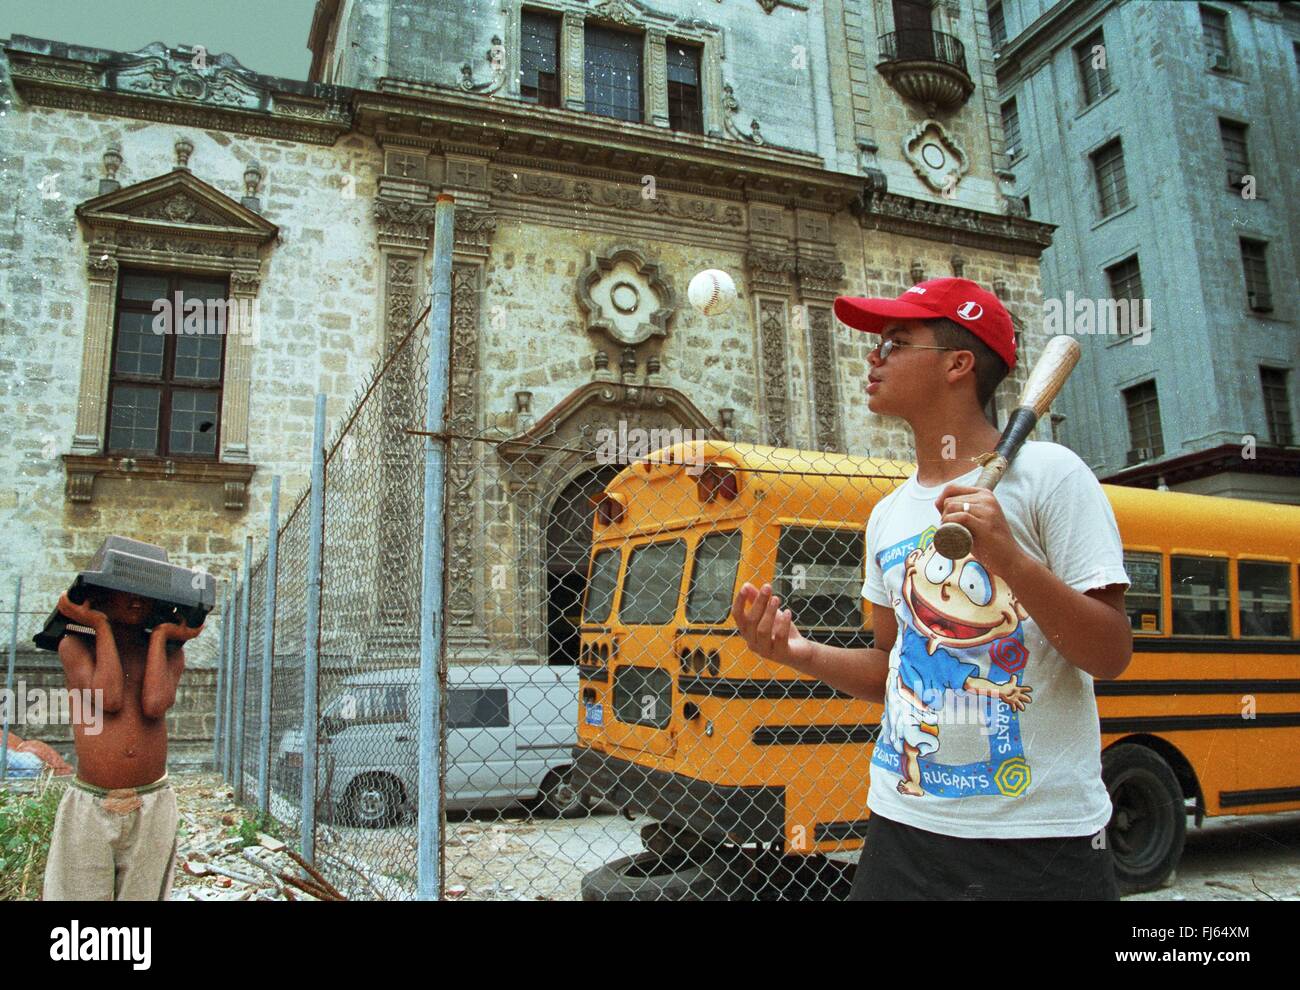 Cuban boy with baseball bat, Cuba. Stock Photo